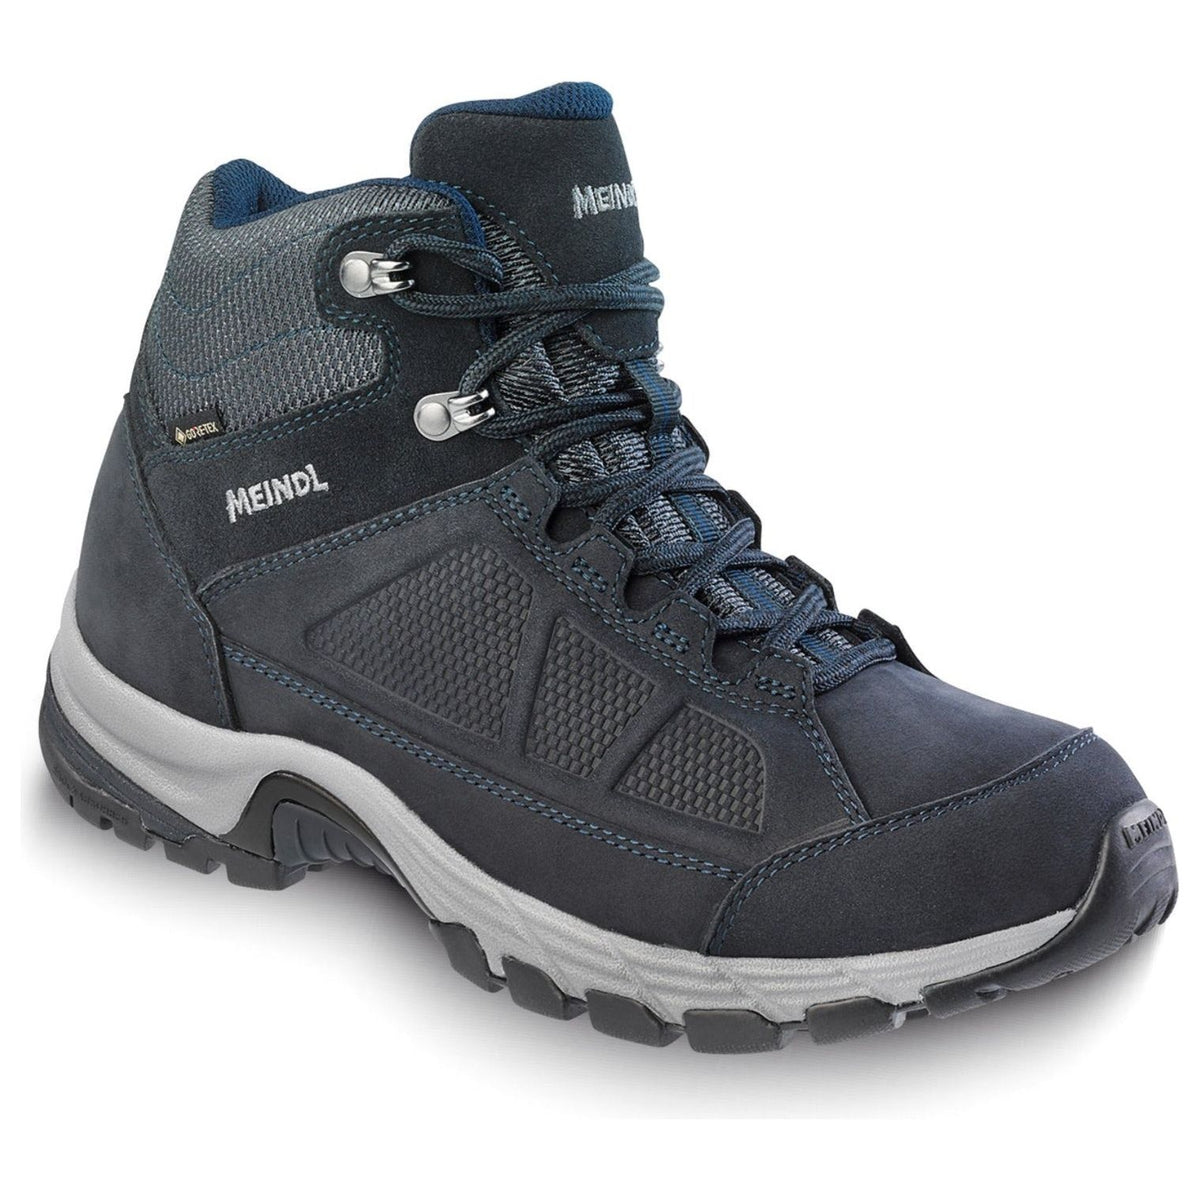 Meindl Orlando Lady Mid GTX Wide Fit Walking Boots - Marine Blue